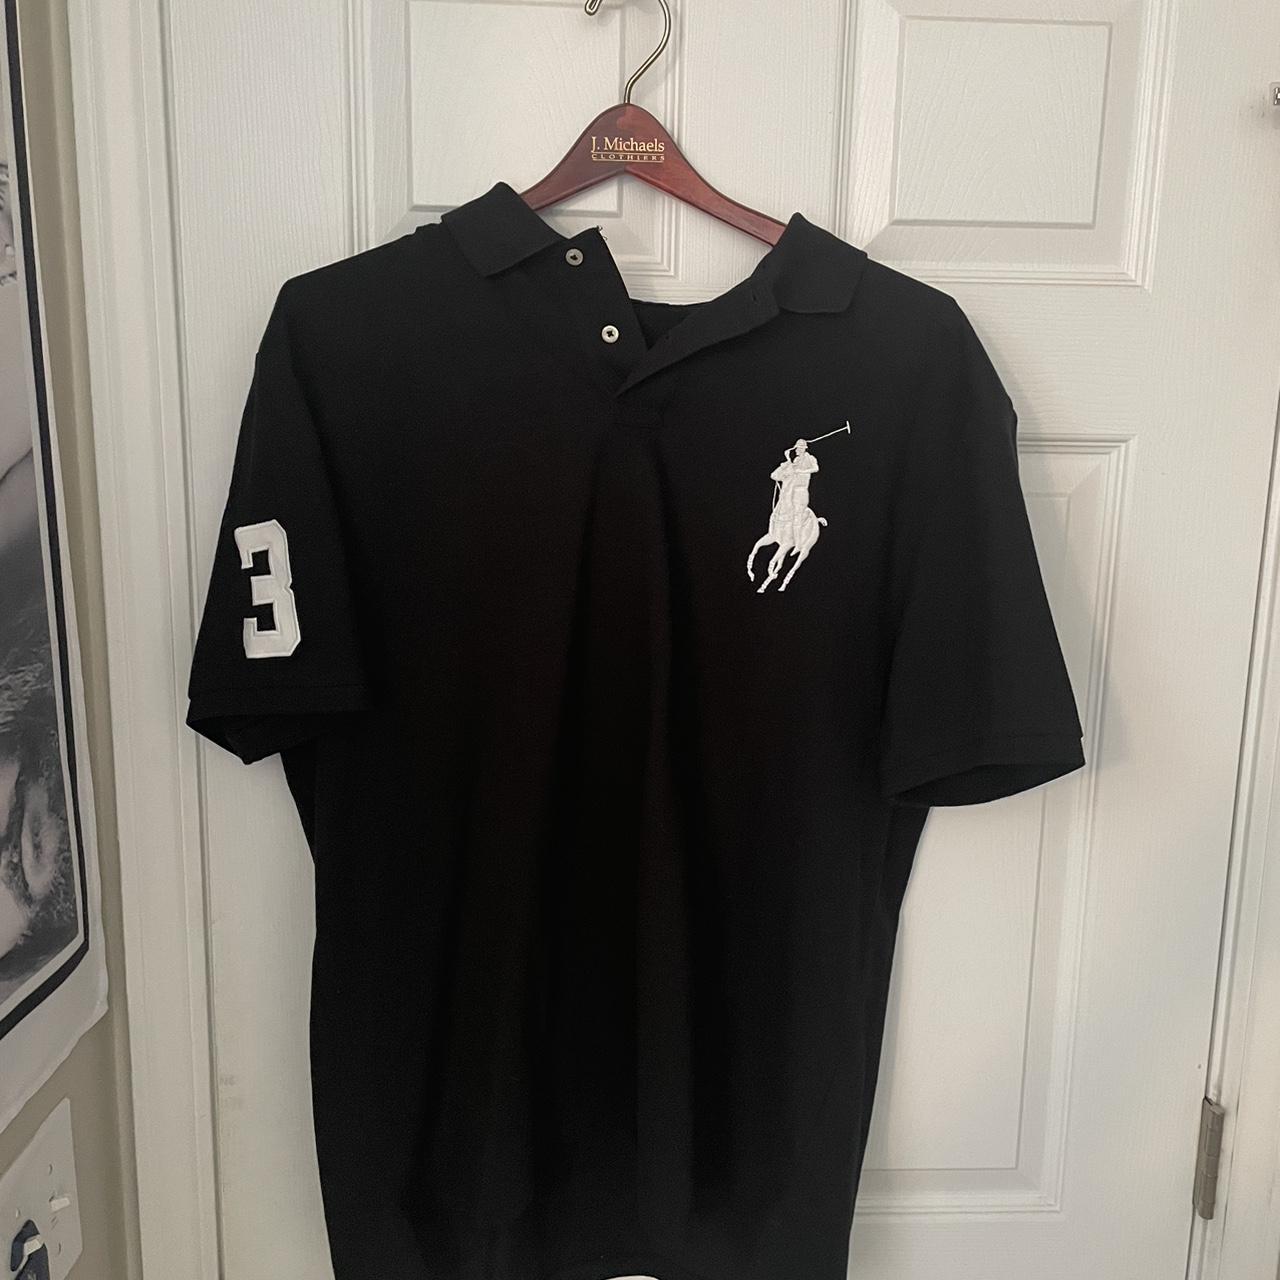 Men’s Black Polo Shirt - Depop